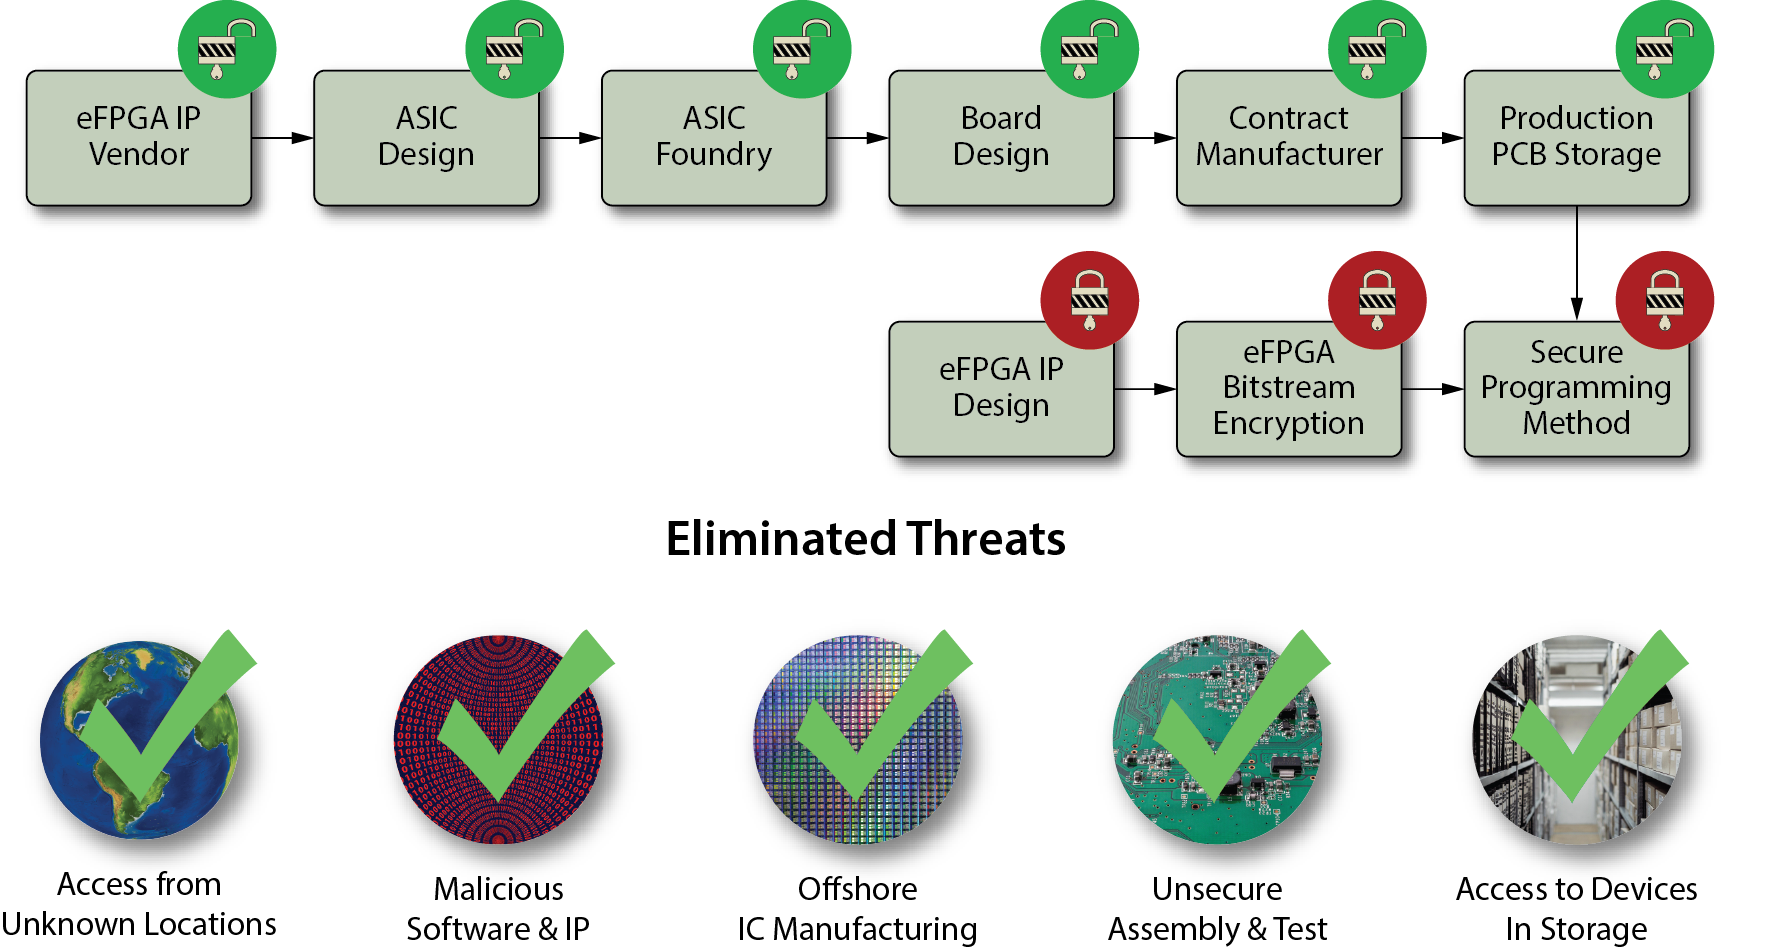 Supply Chain Security for eFPGA Design